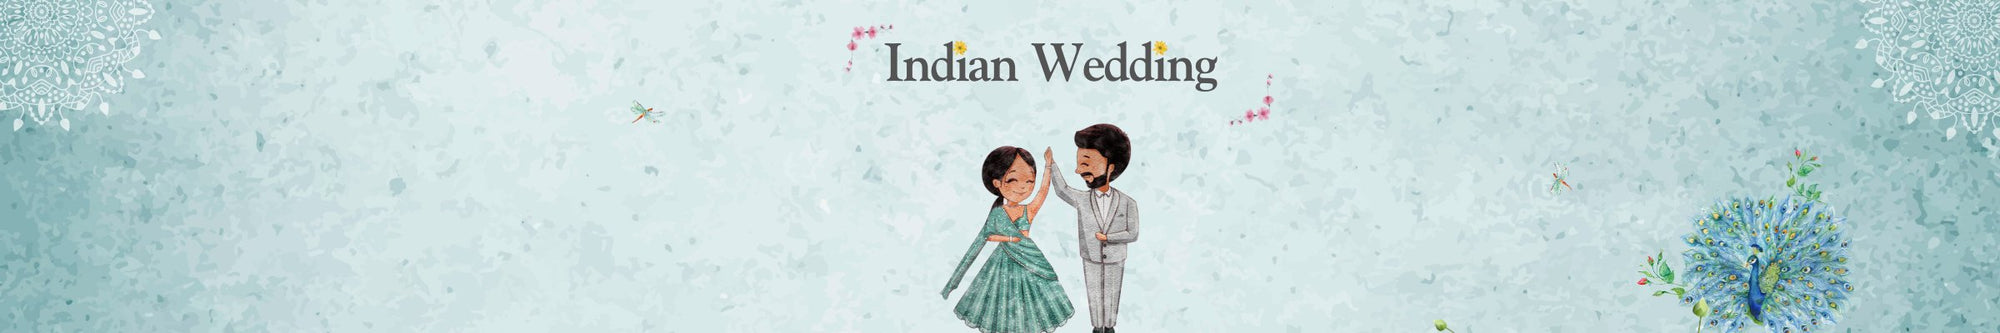 boda india